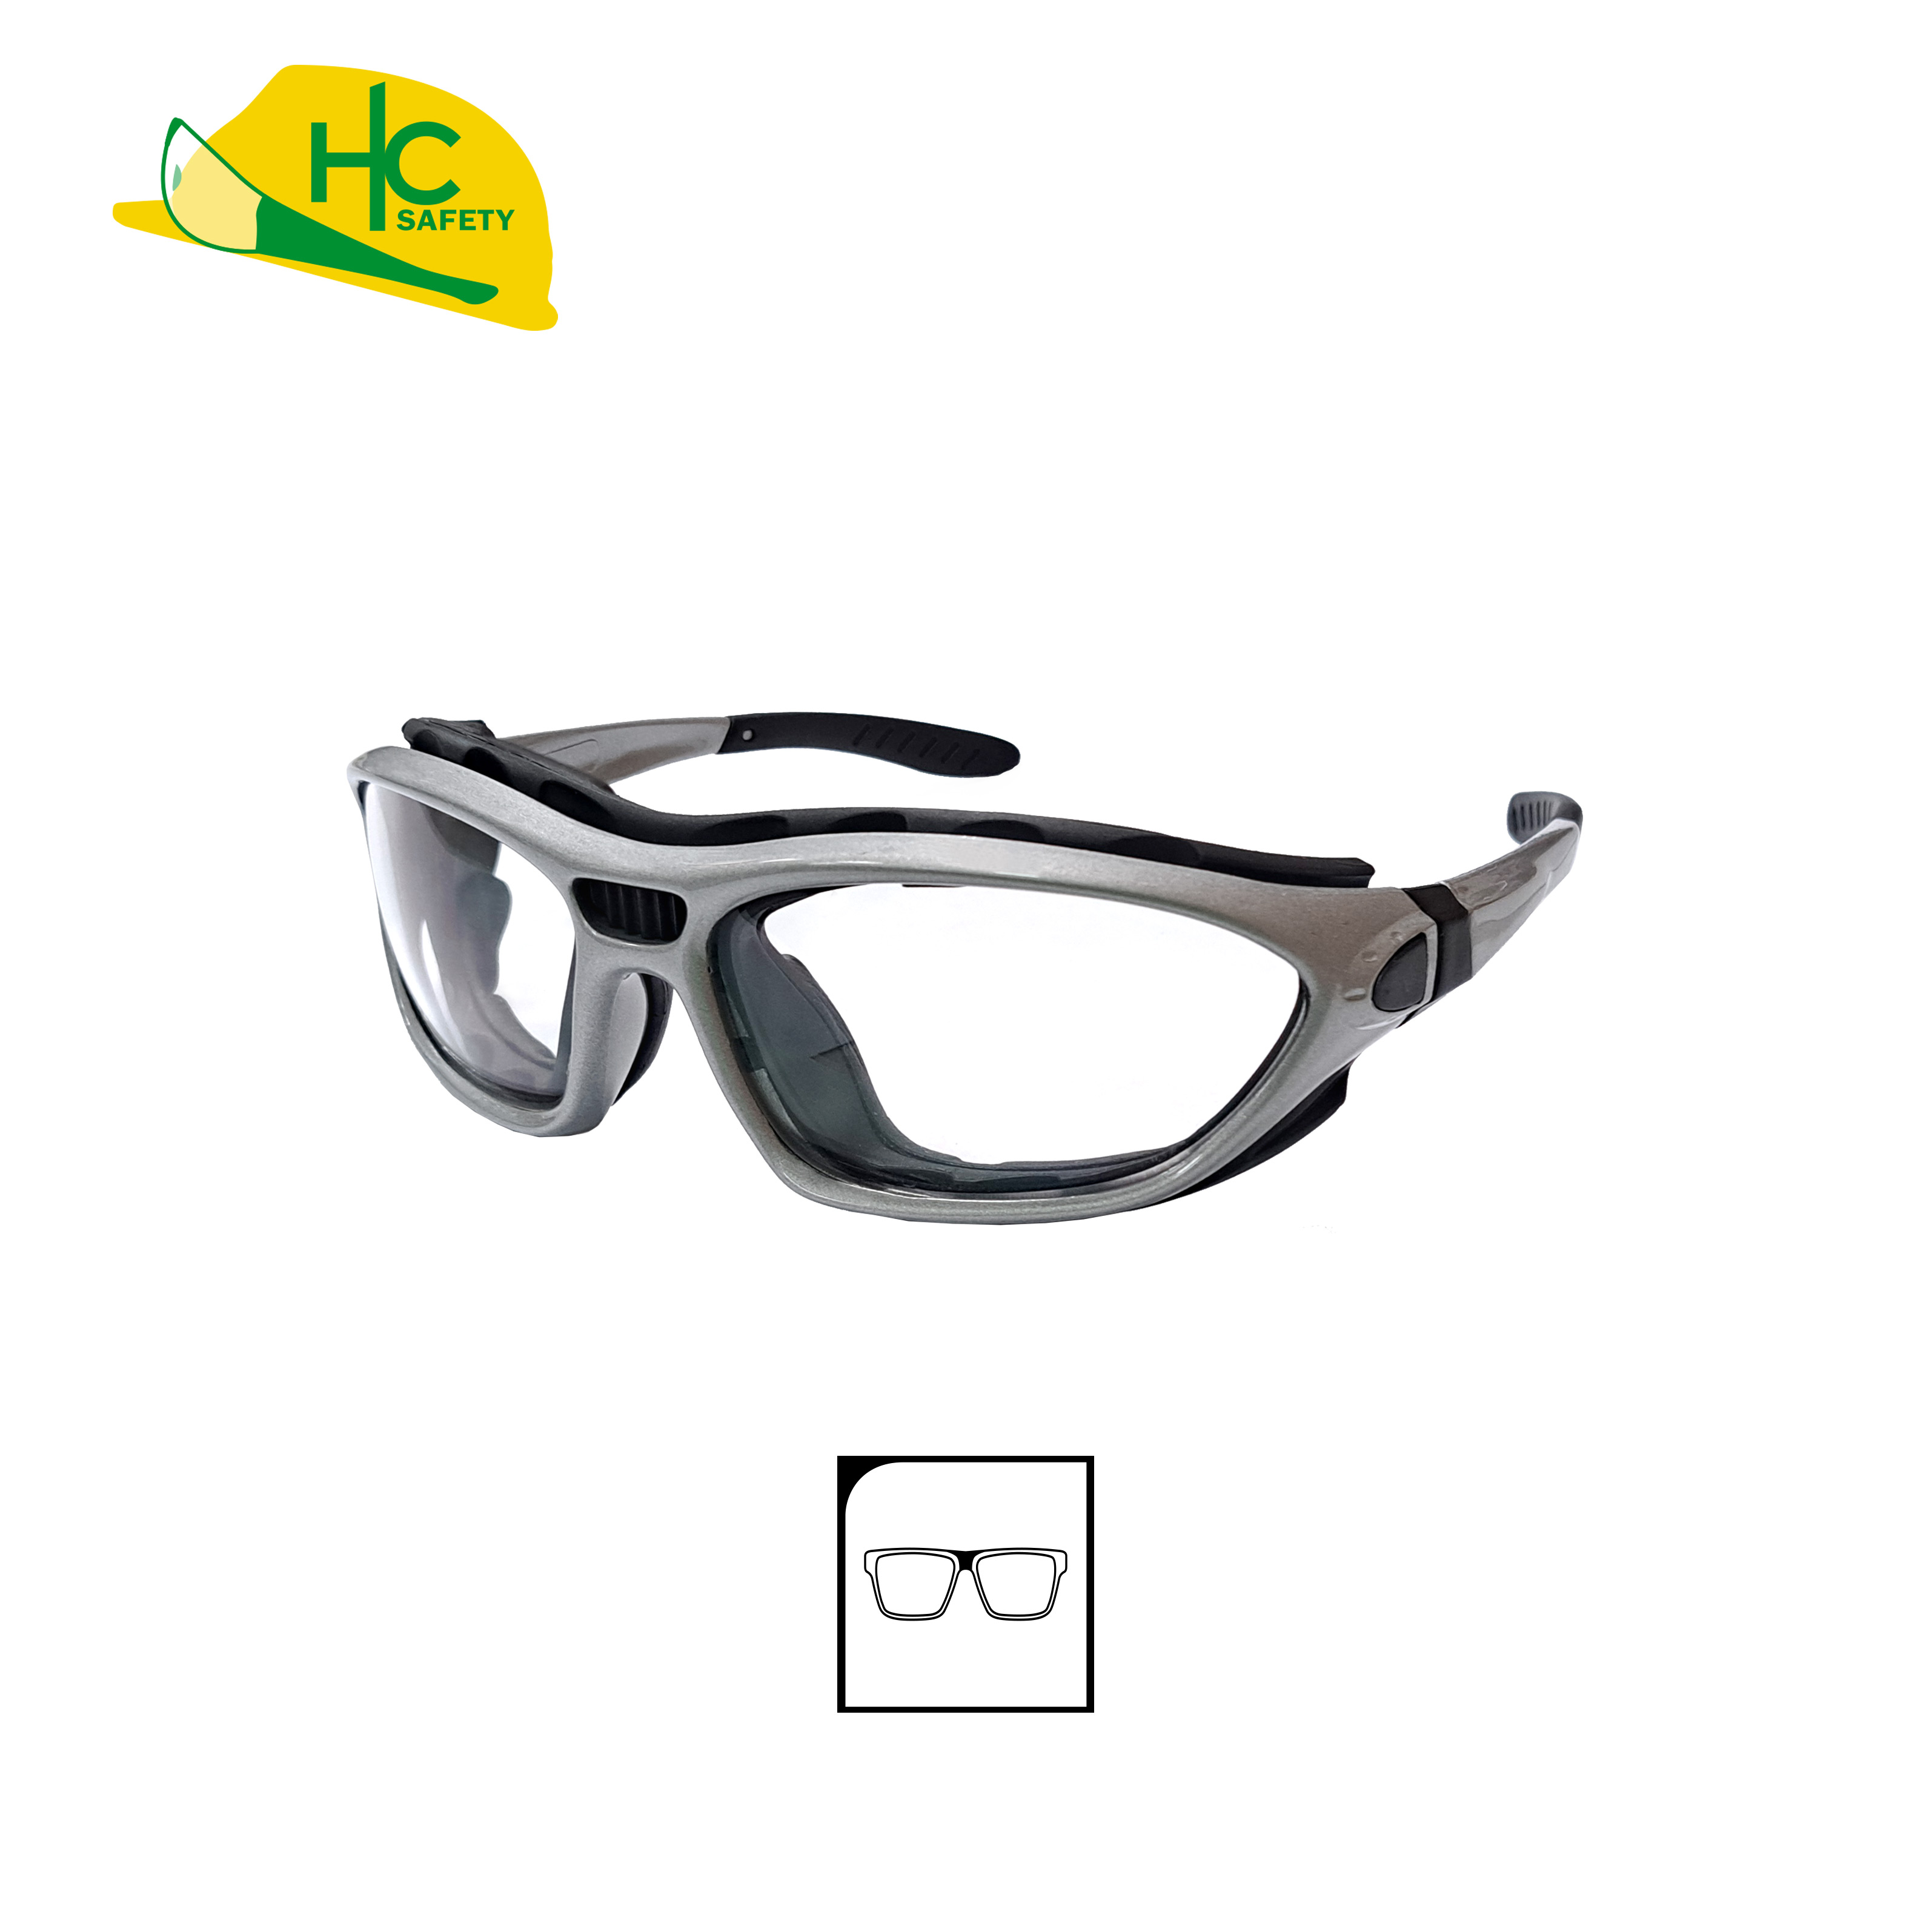 A05, Safety Glasses